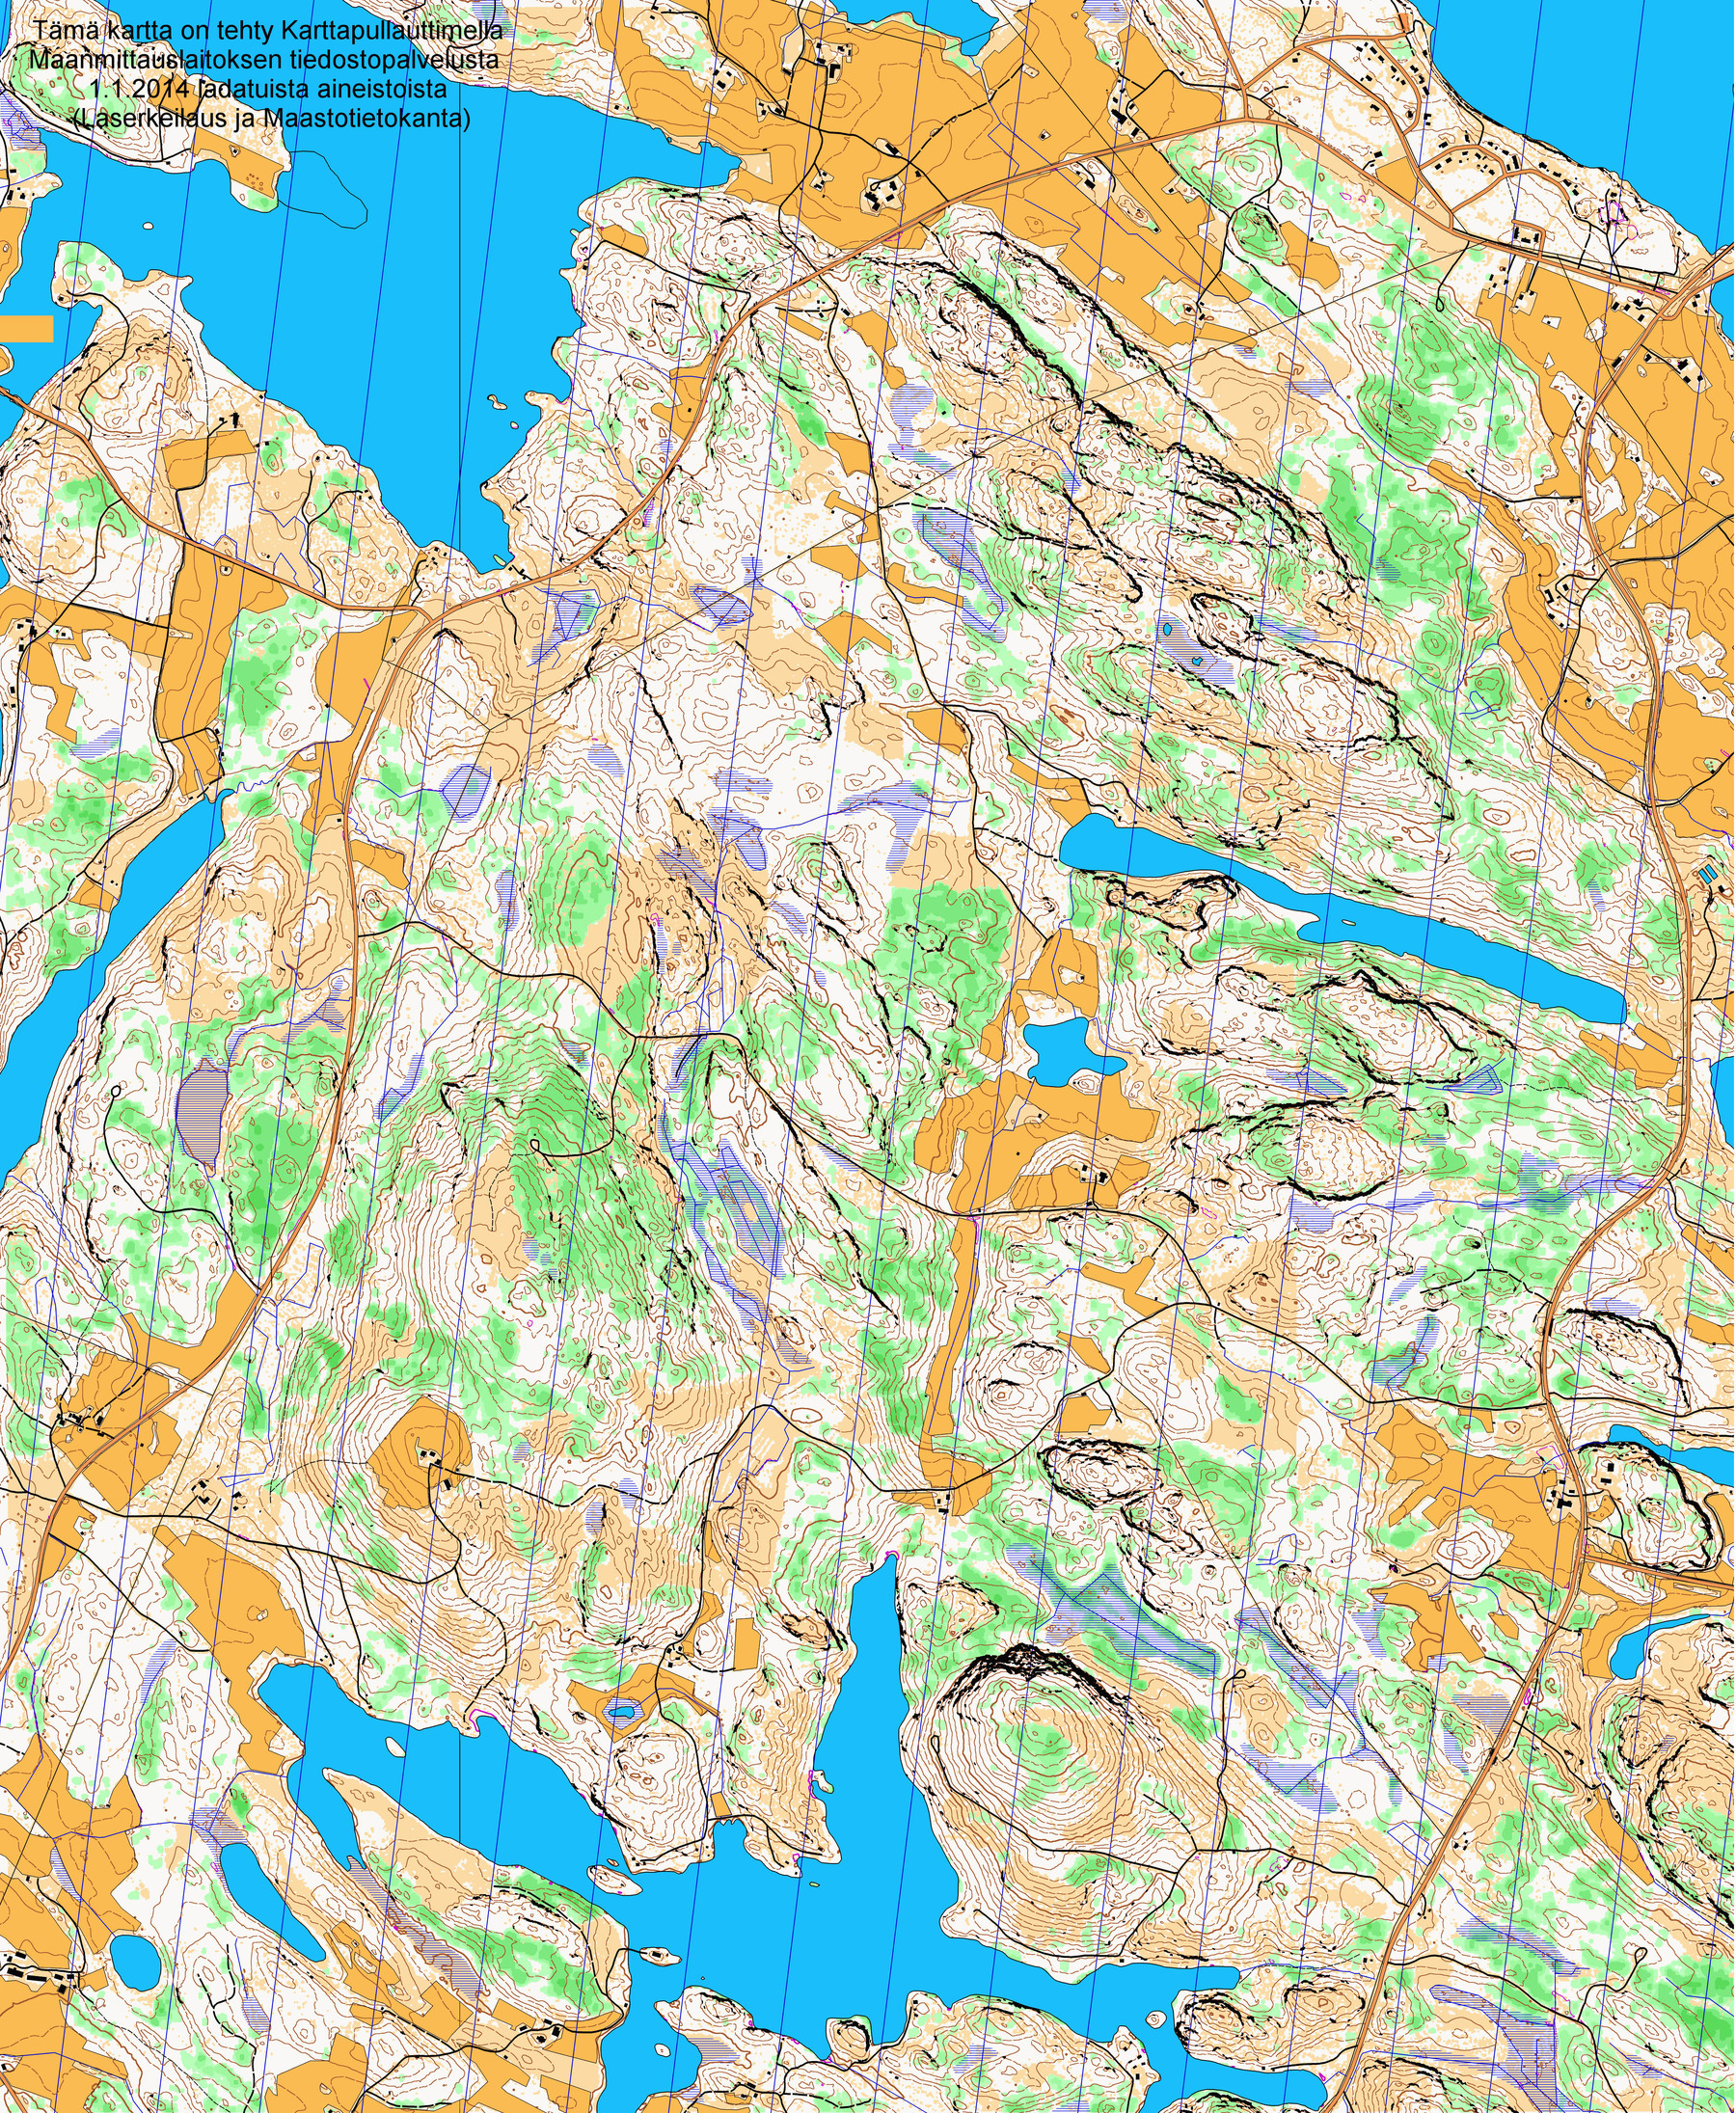 Jukola 2014 maps: Click to compare maps (03.01.2014)